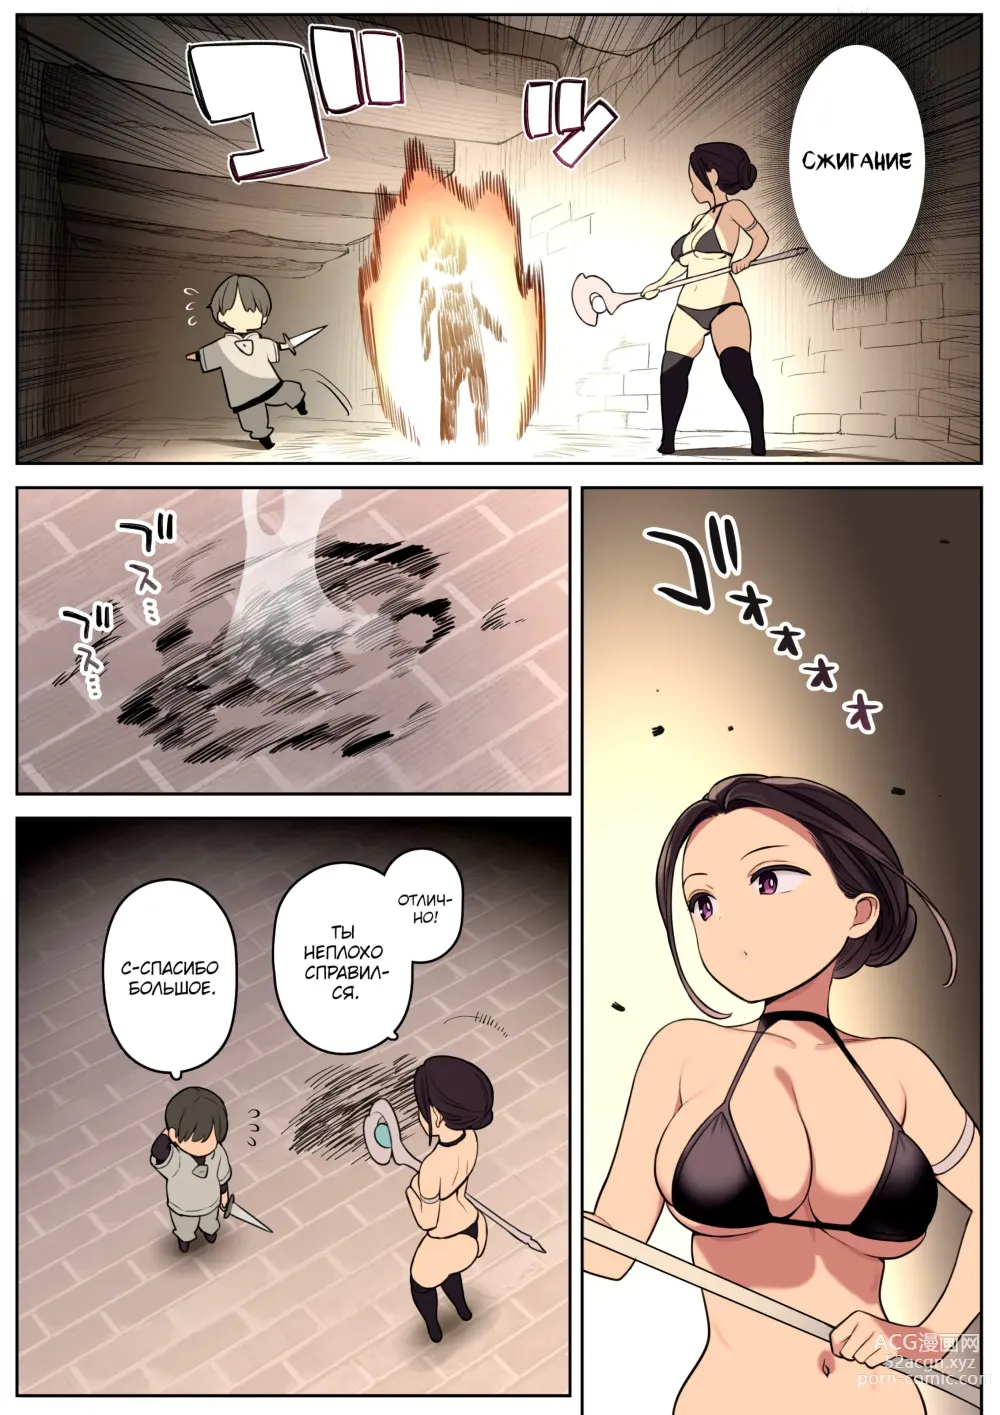 Page 4 of doujinshi Приключения с развратным навыком